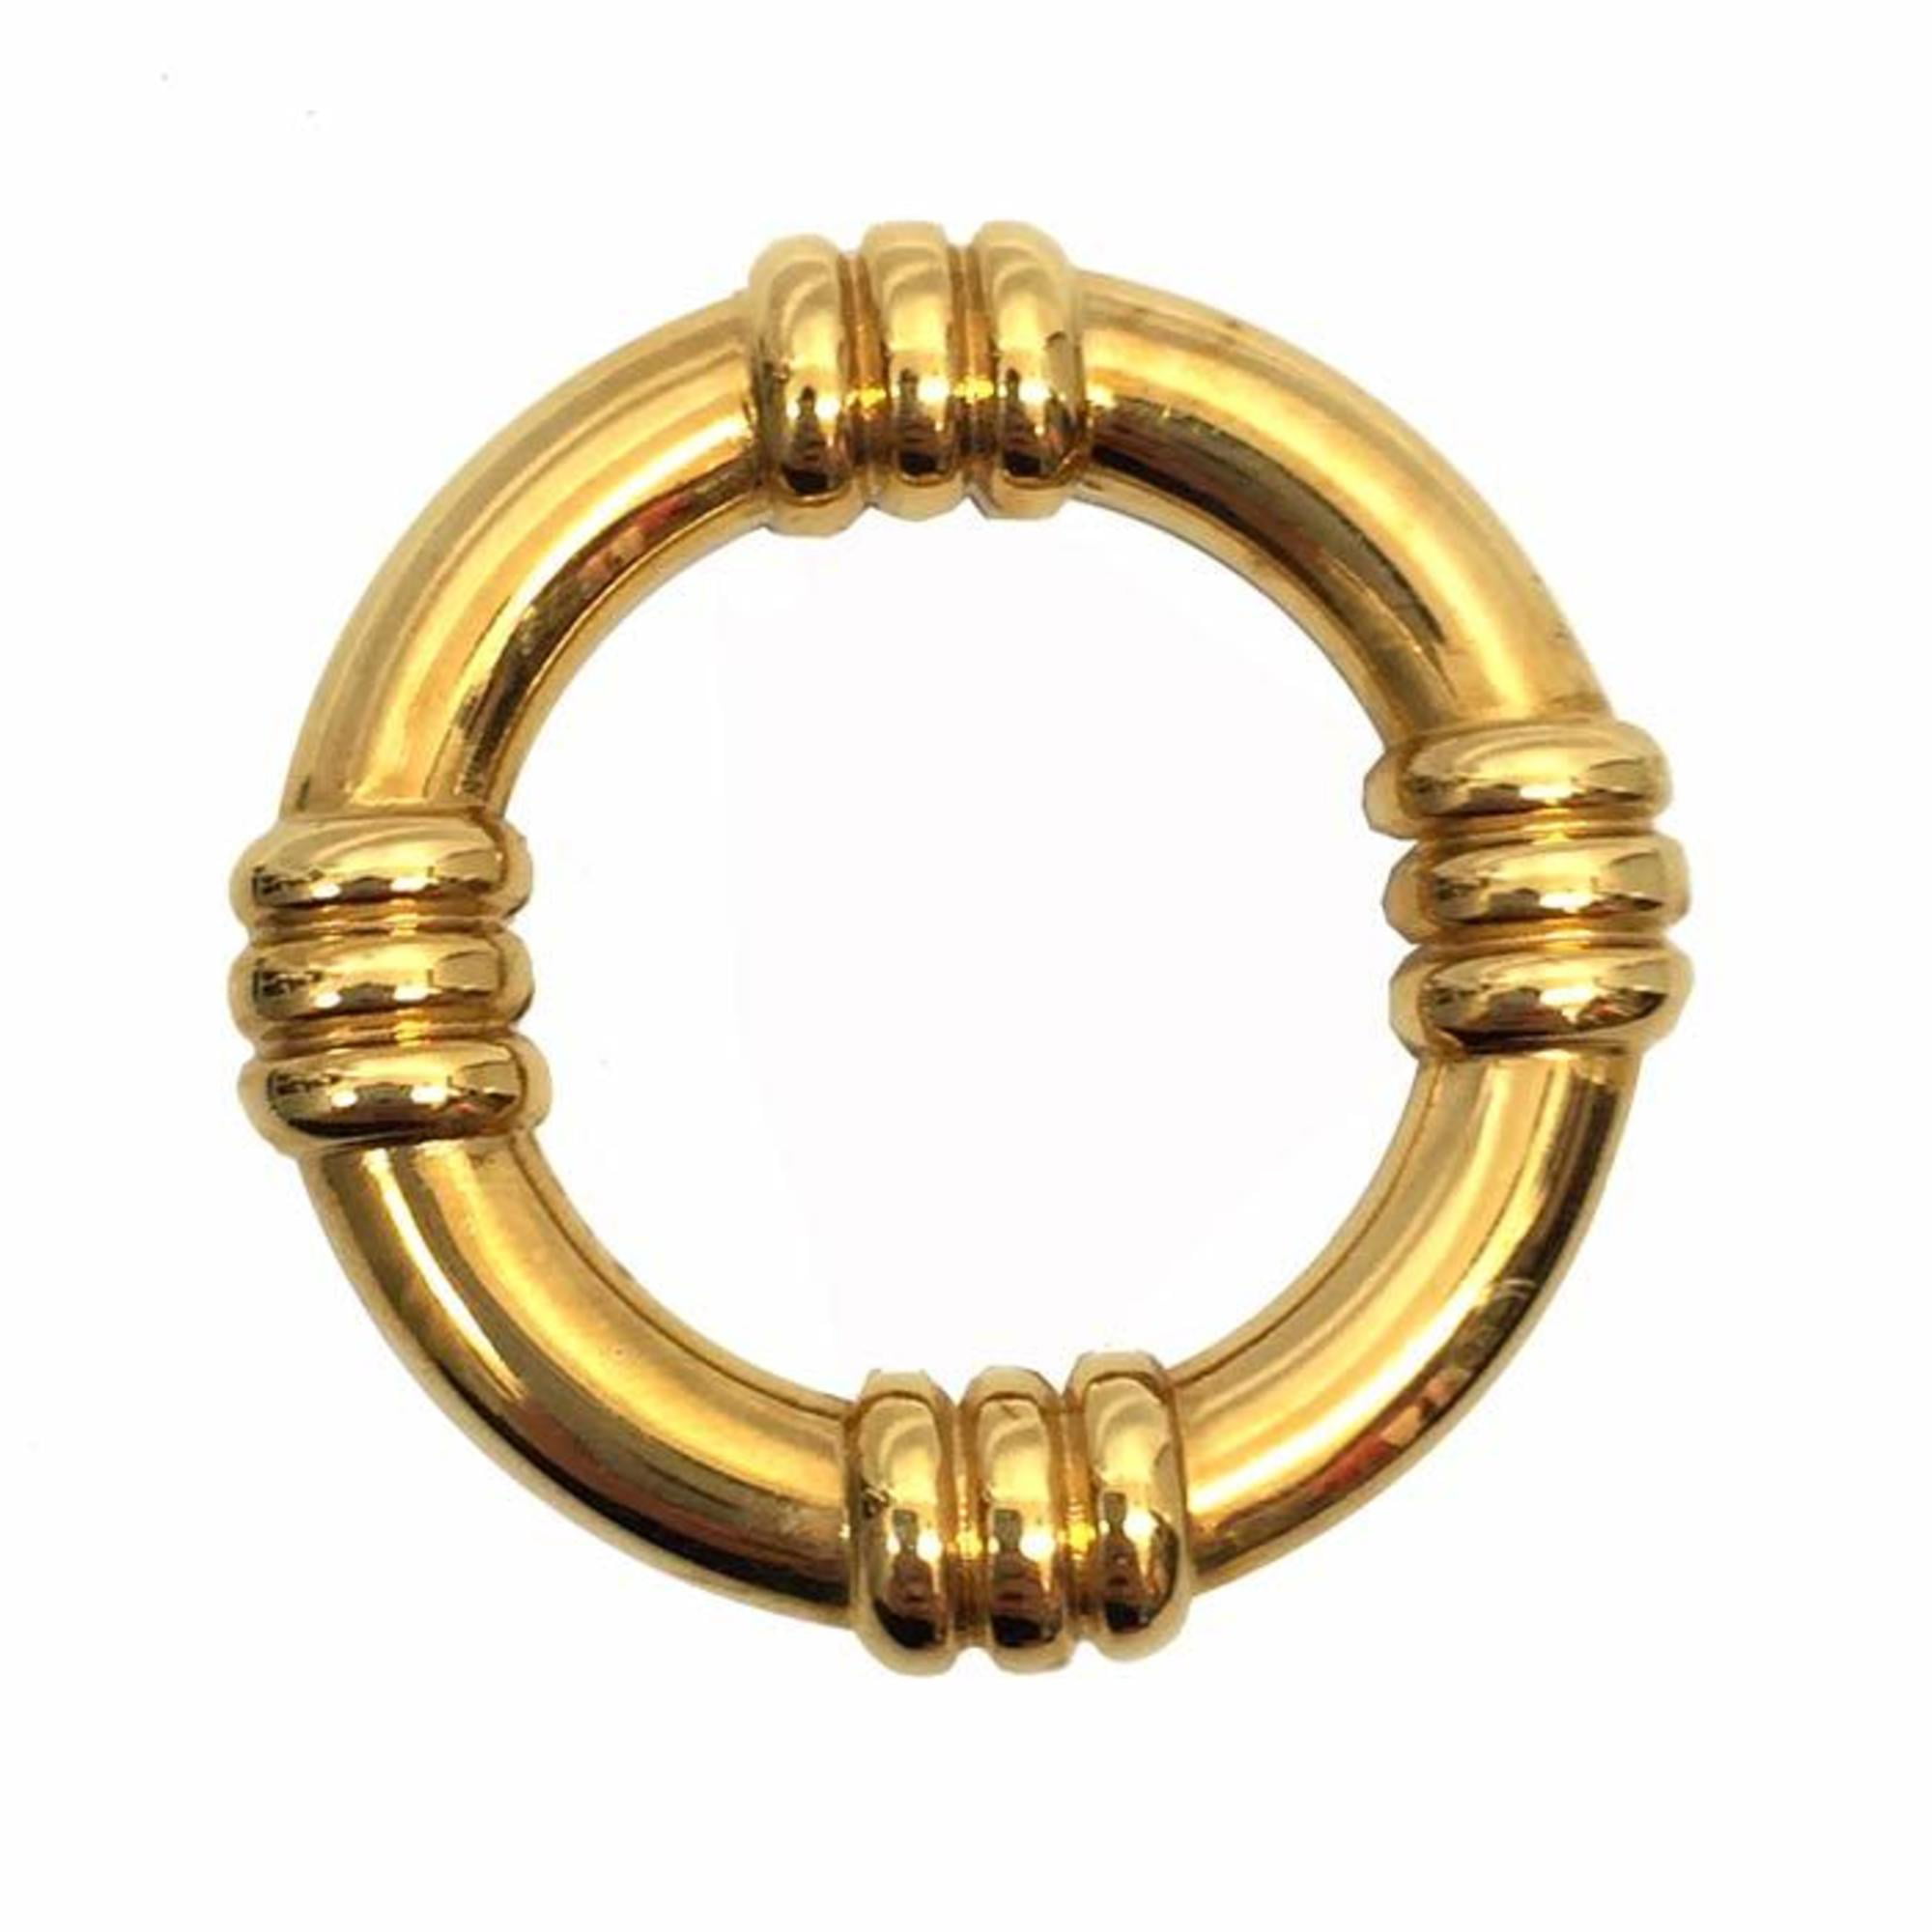 HERMES Logo Jumbo Hook Scarf Ring Gold-Plated Accessory 60MU418